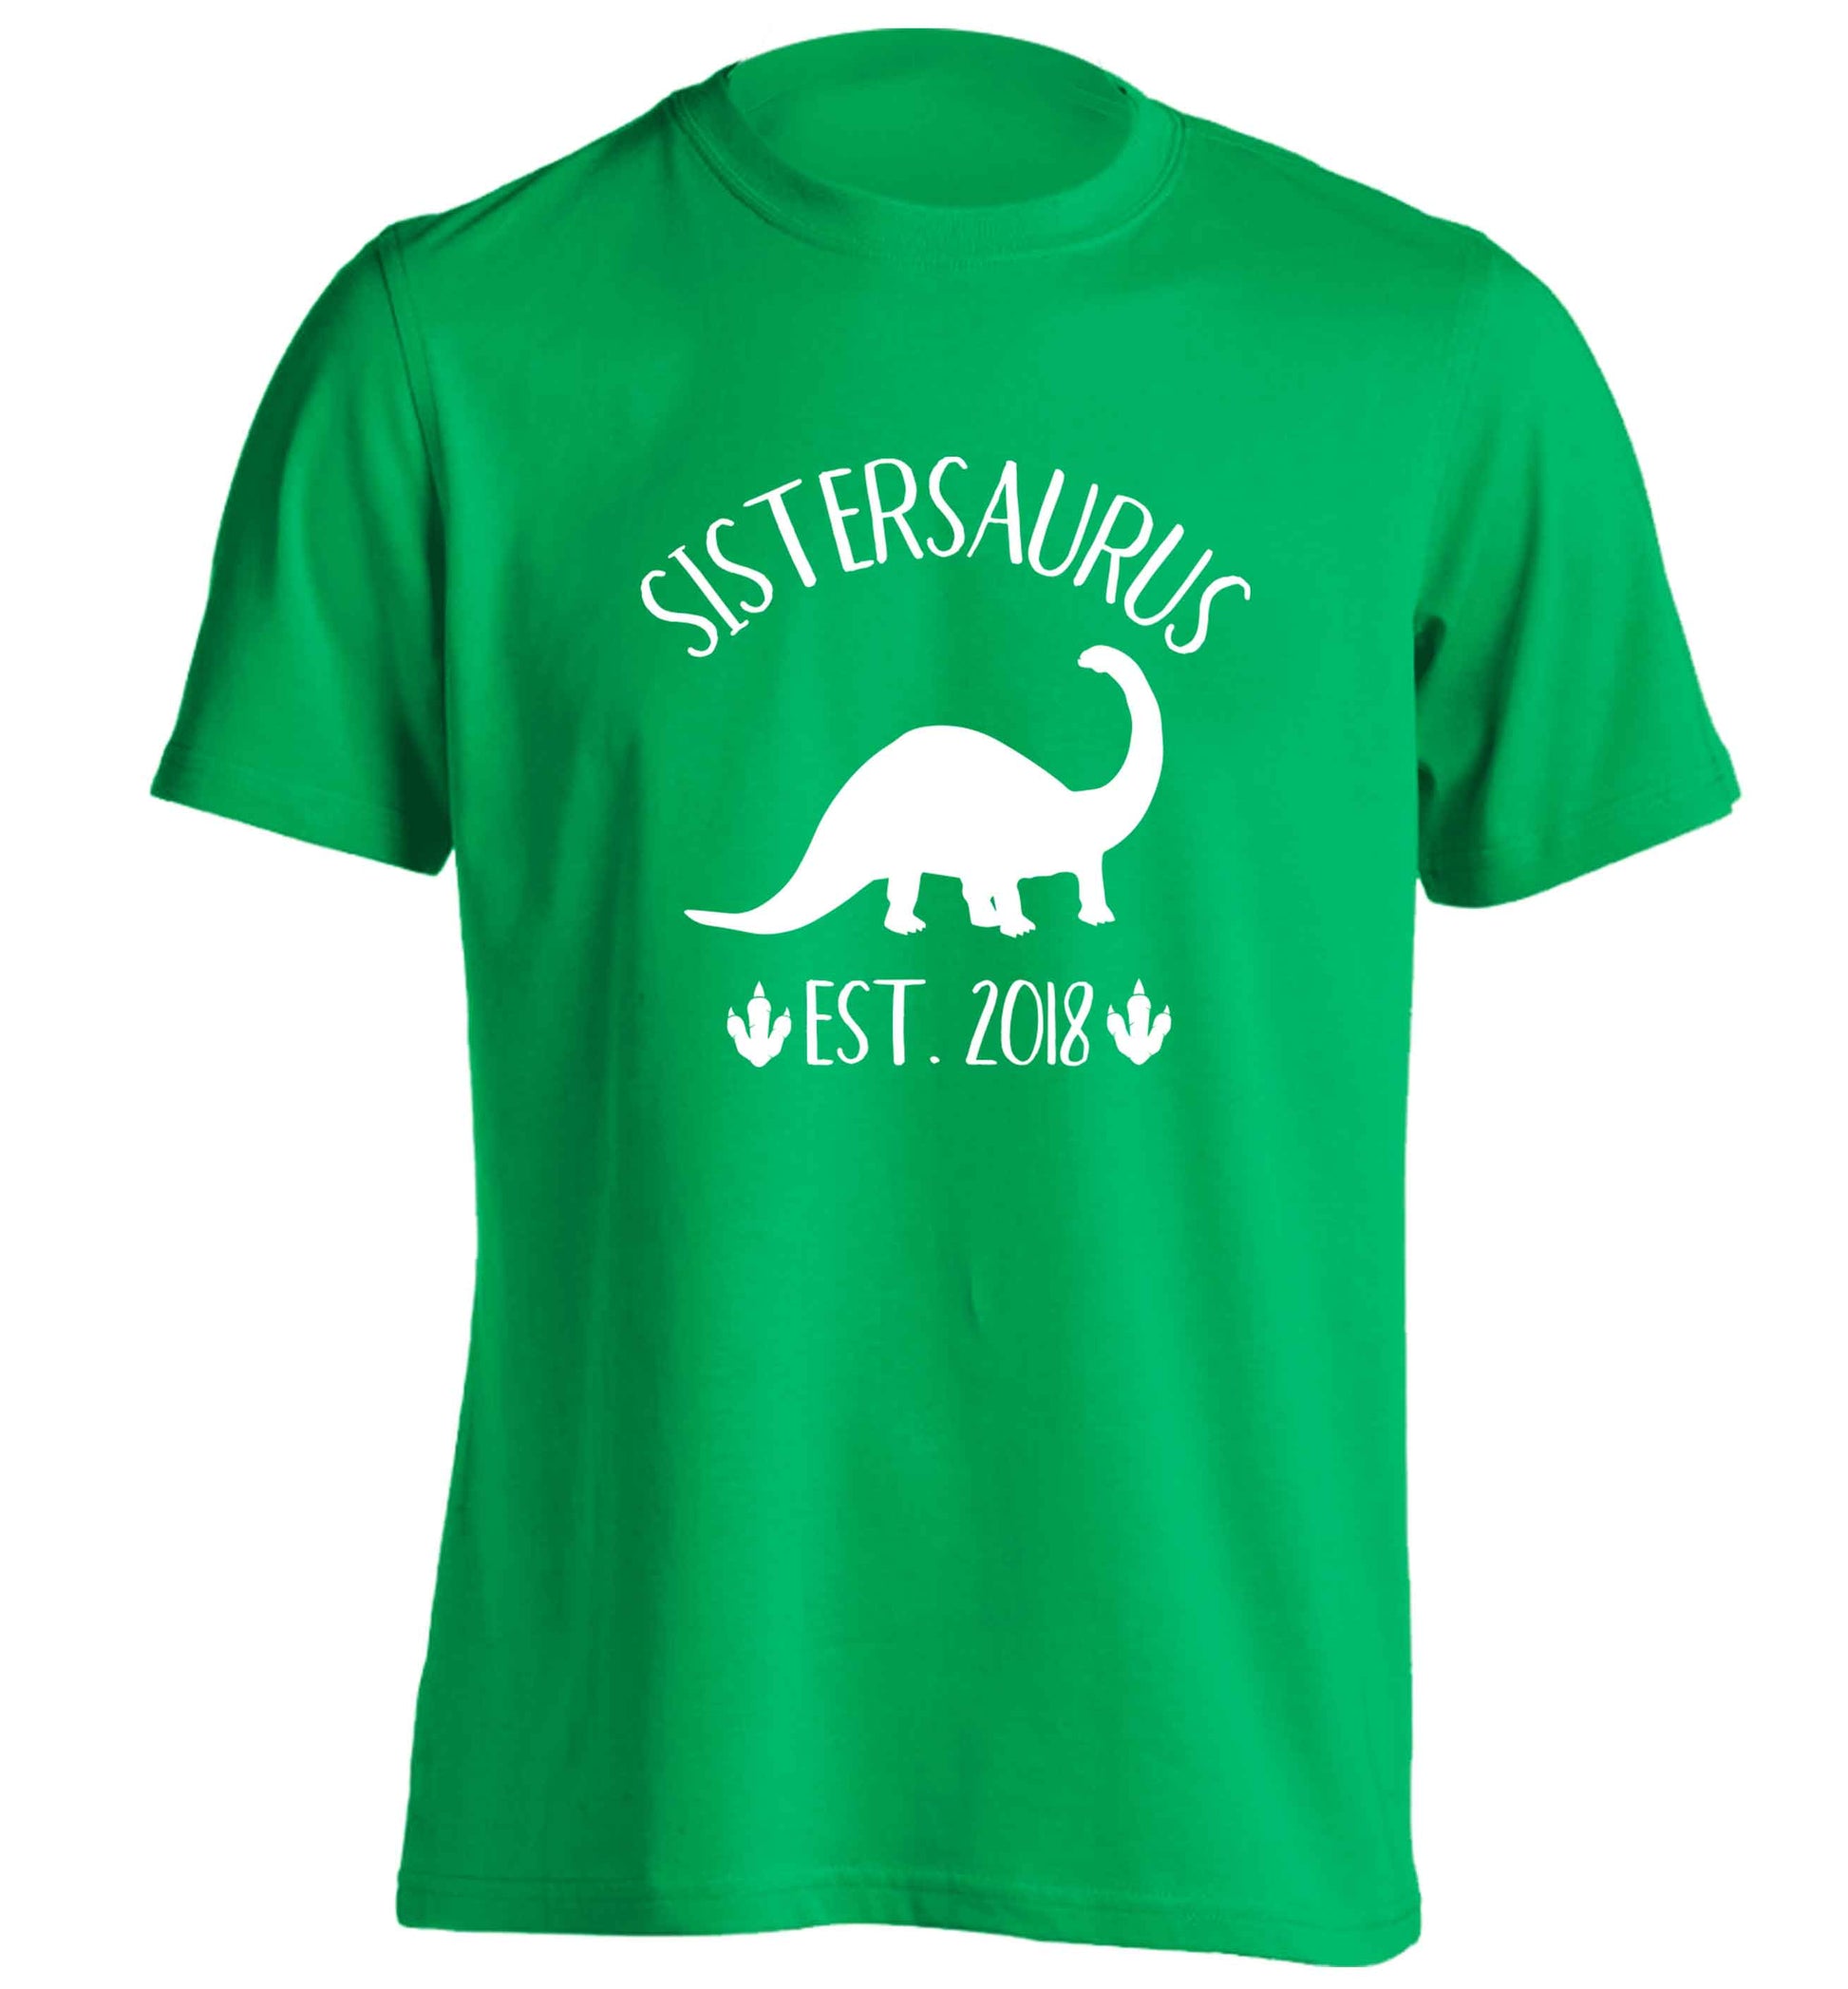 Personalised sistersaurus since (custom date) adults unisex green Tshirt 2XL